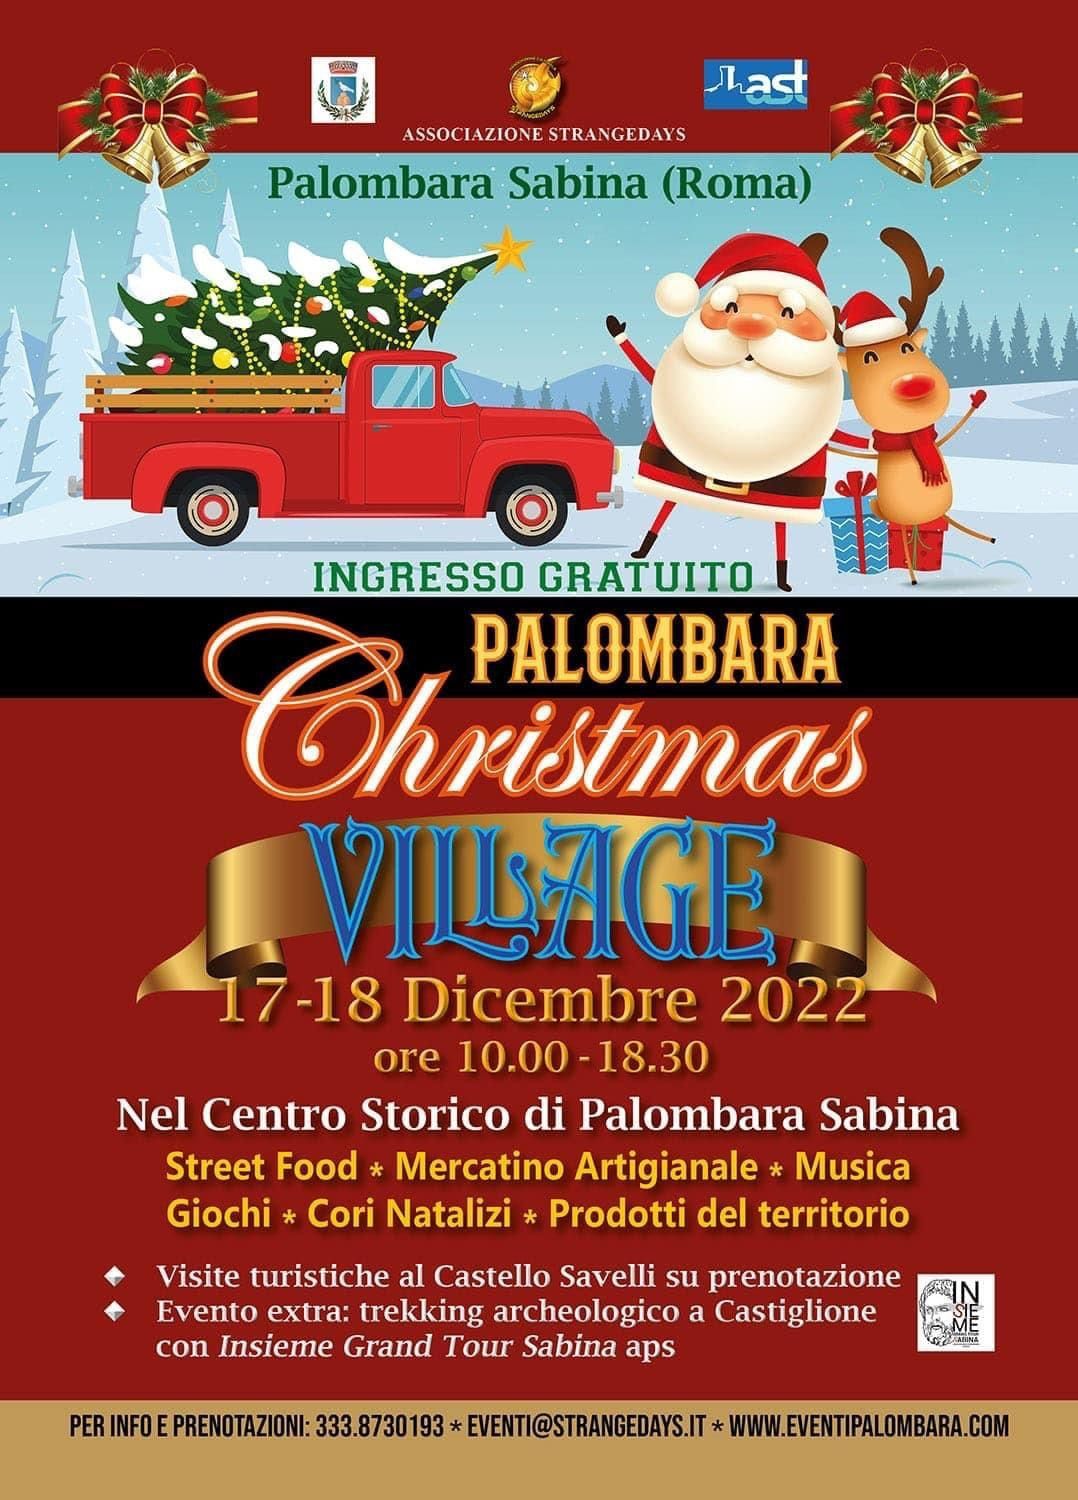 Palombara Christmas Village